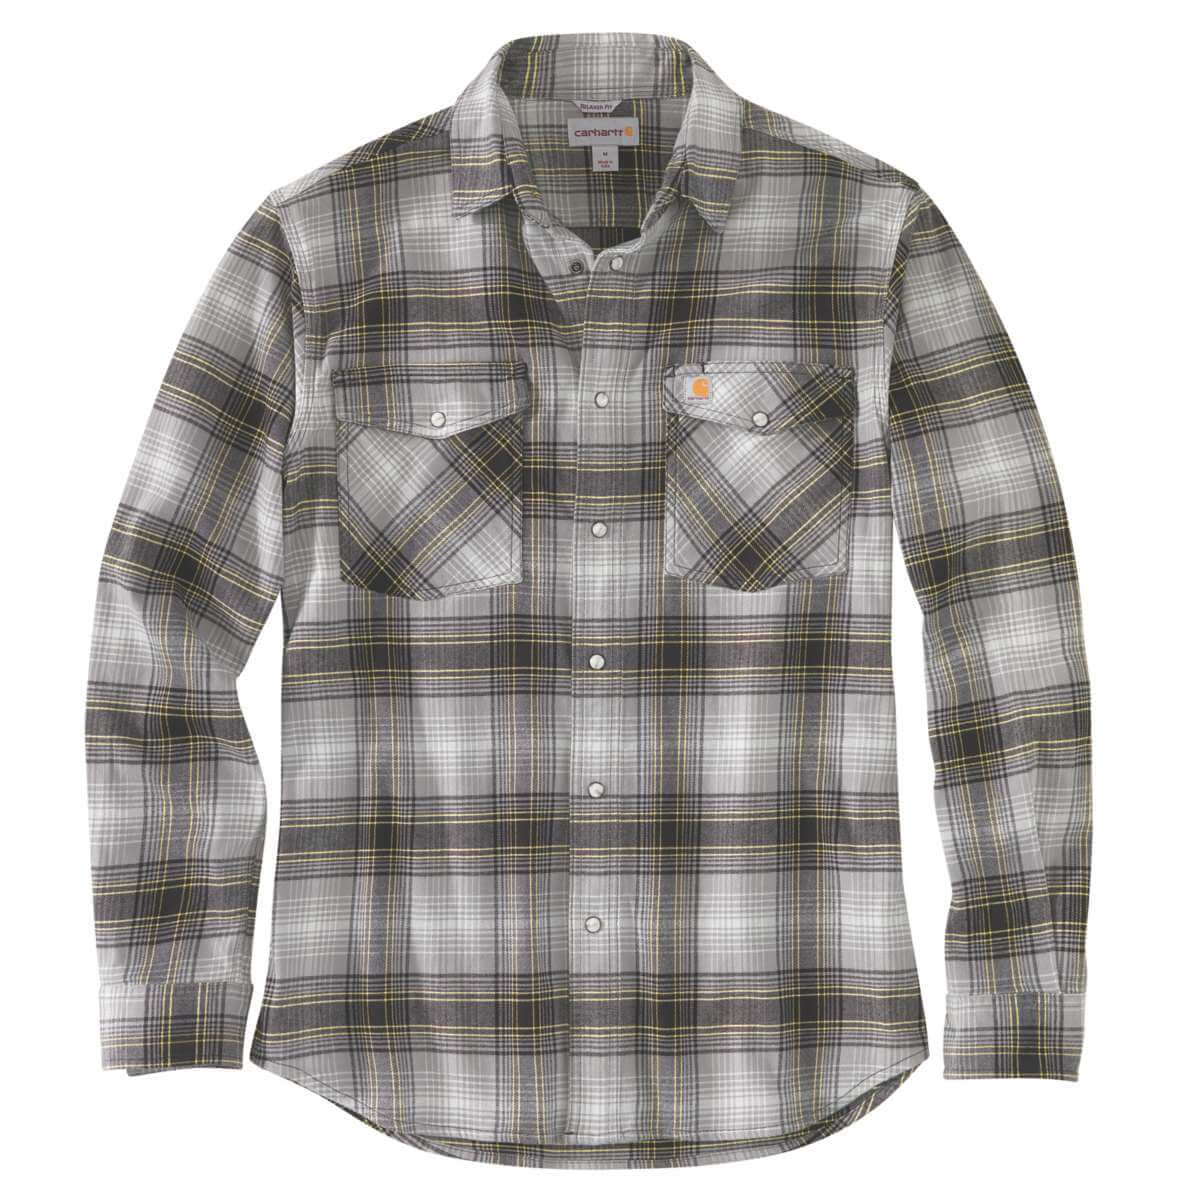 104449 - Carhartt Men's Rugged Flex Relaxed Fit Flannel Long-Sleeve Plaid Shirt